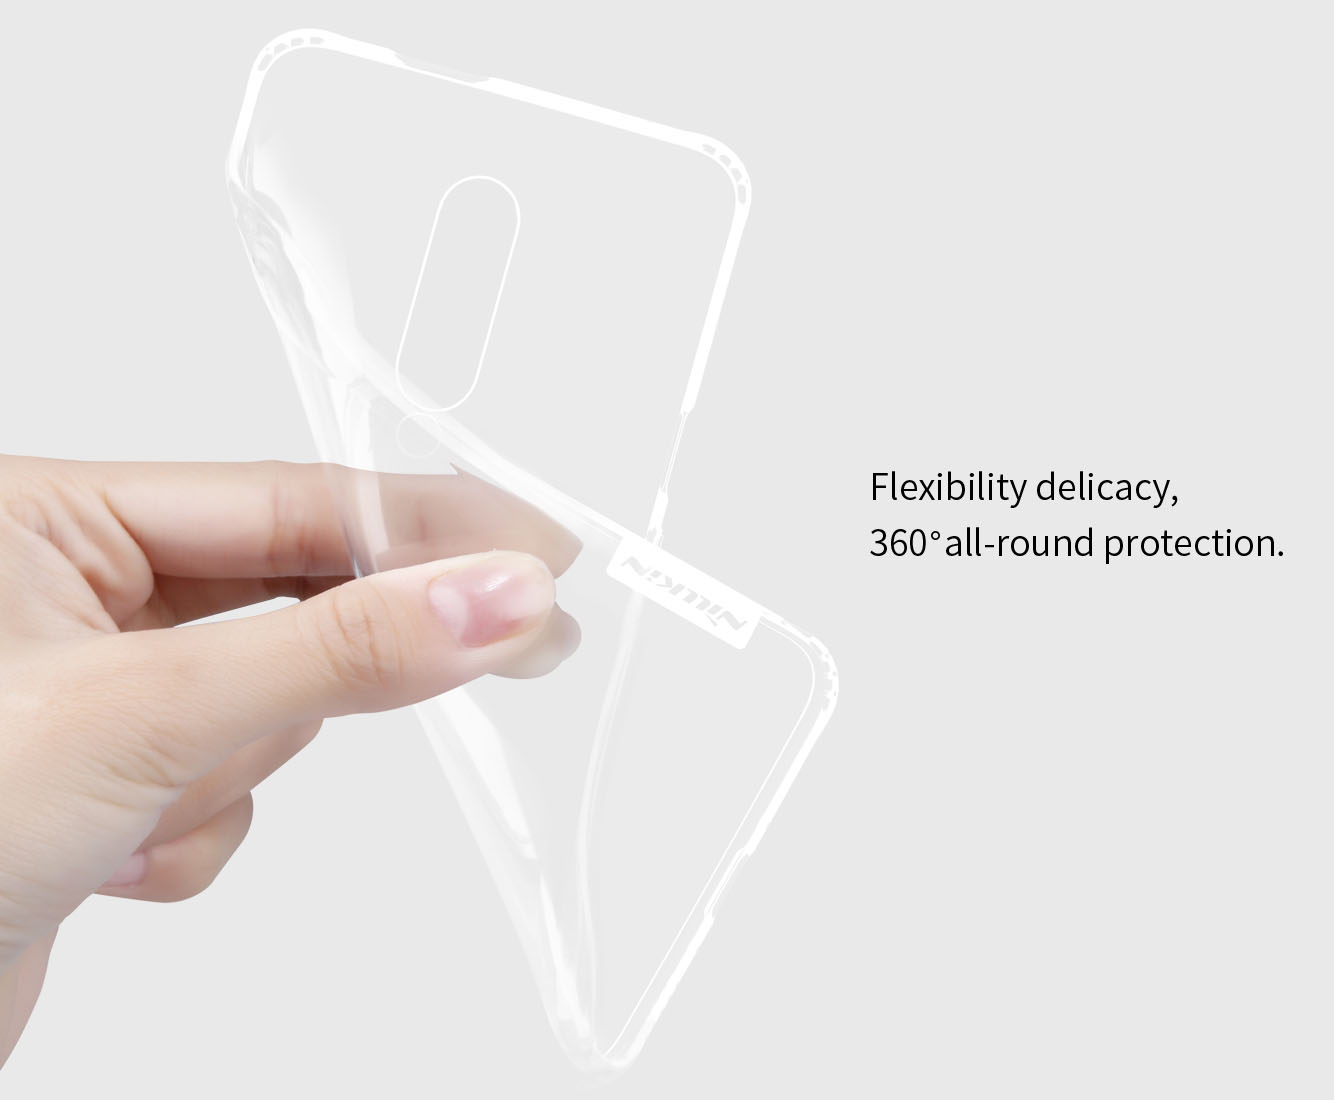 OnePlus 7 Pro case